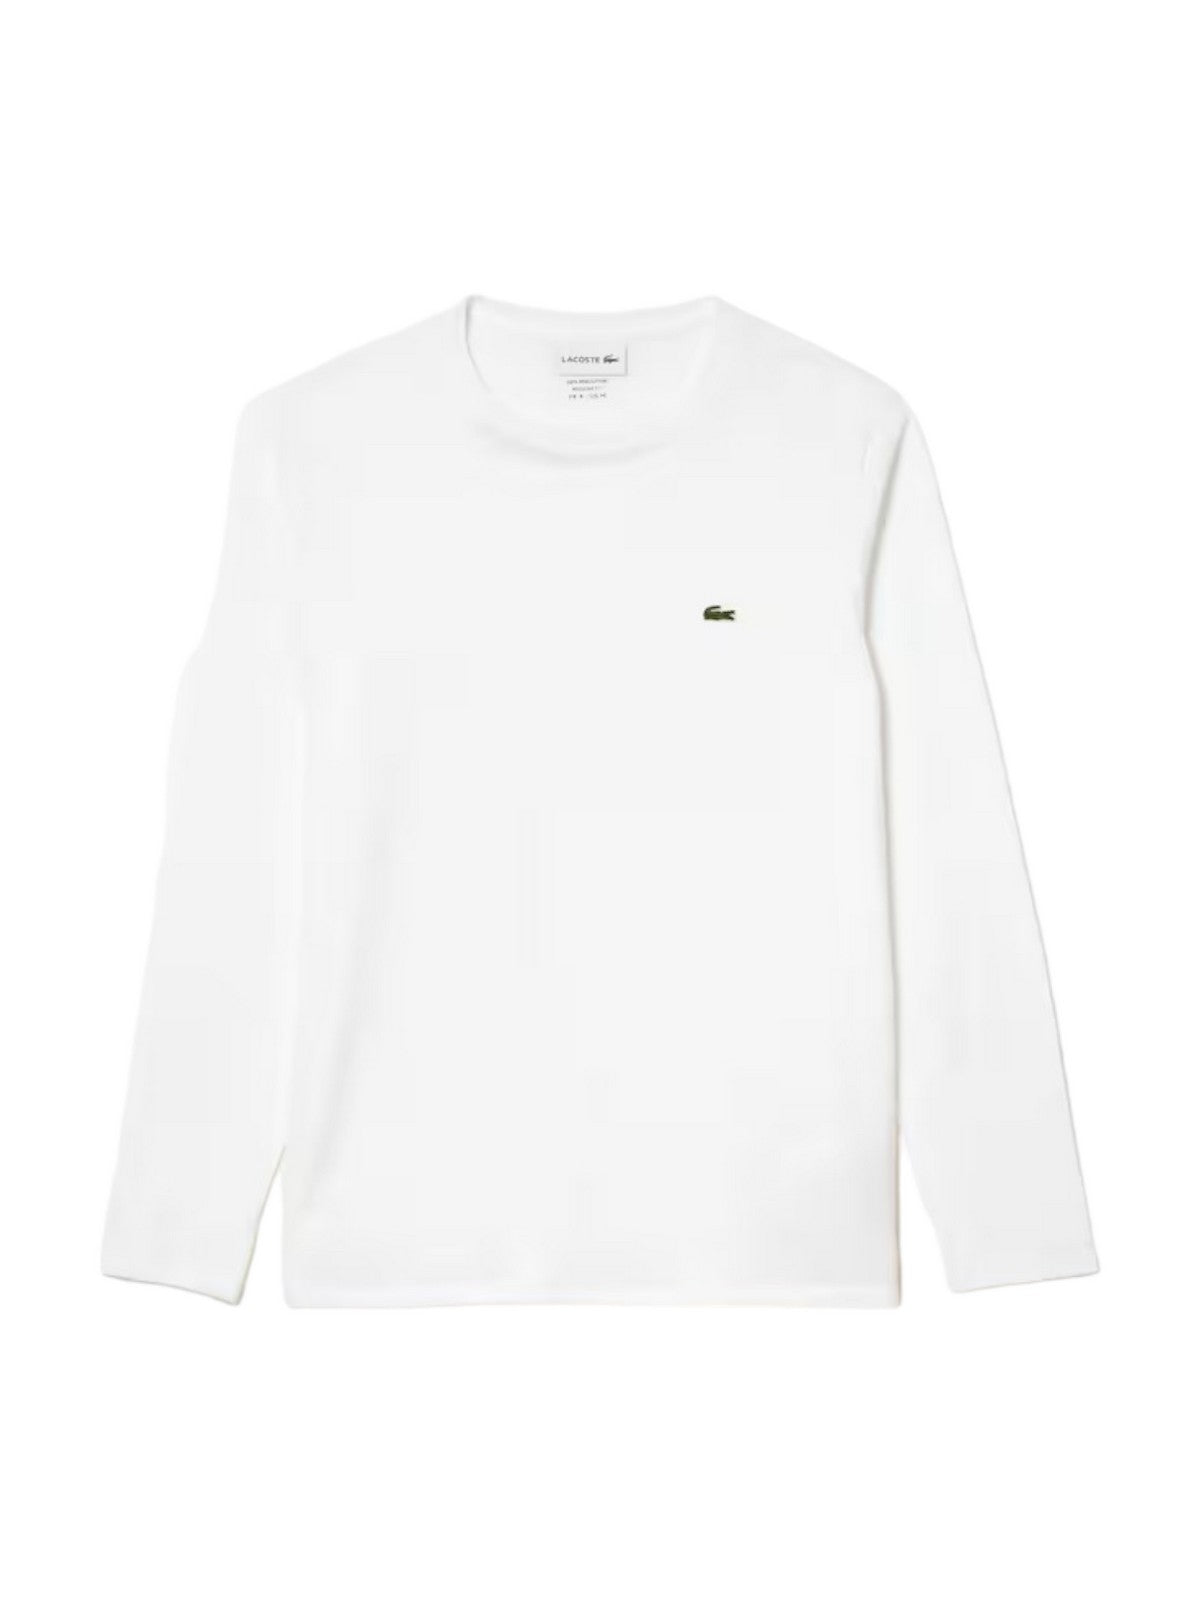 LACOSTE T-Shirt e Polo Uomo  TH6712 001 Bianco